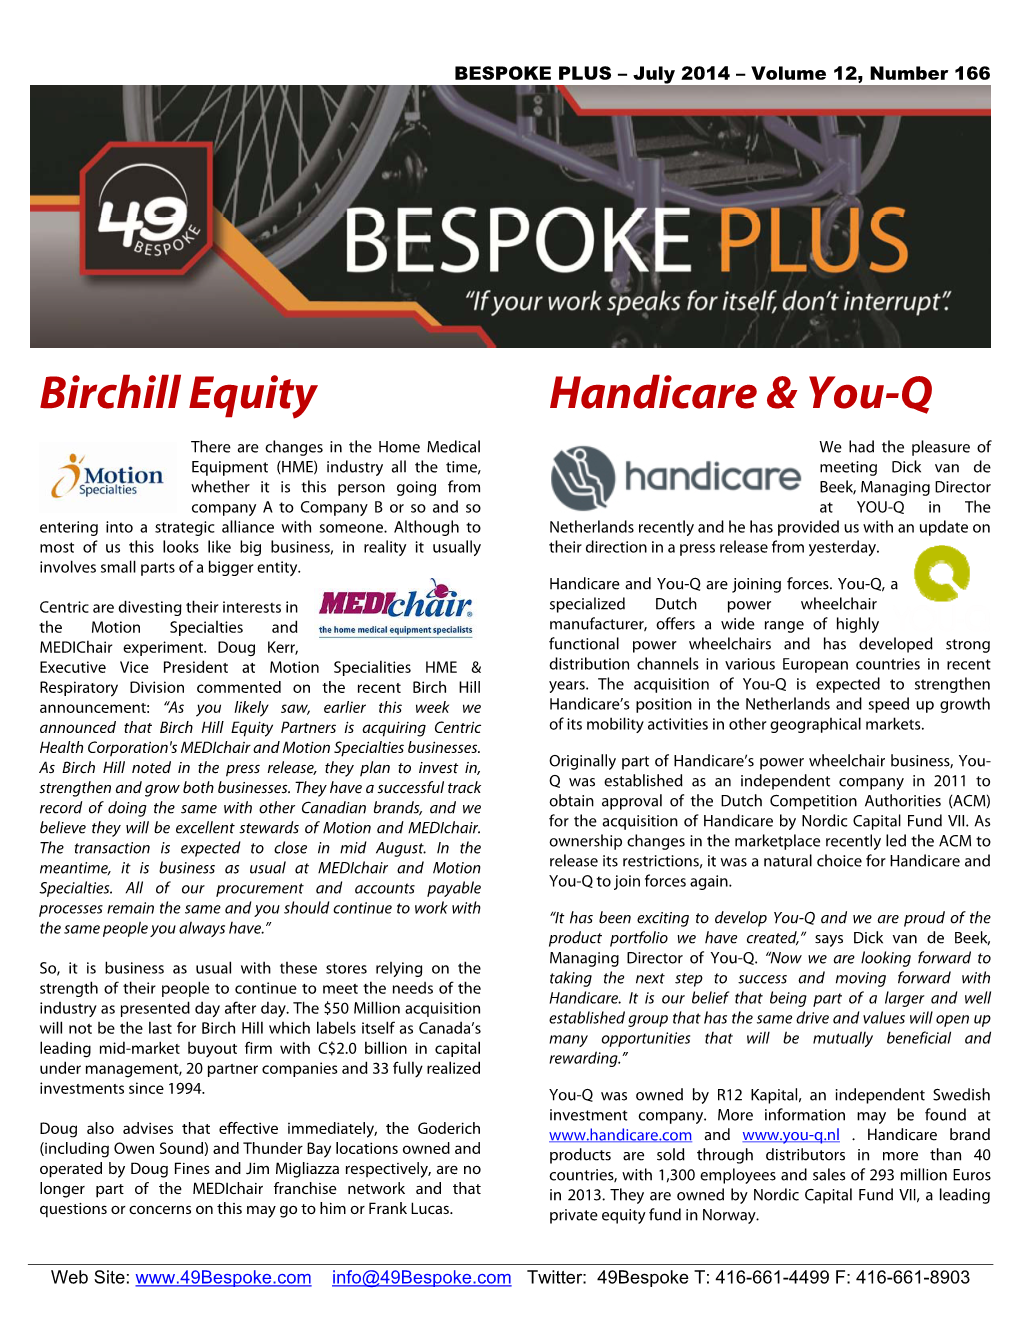 Birchill Equity Handicare & You-Q